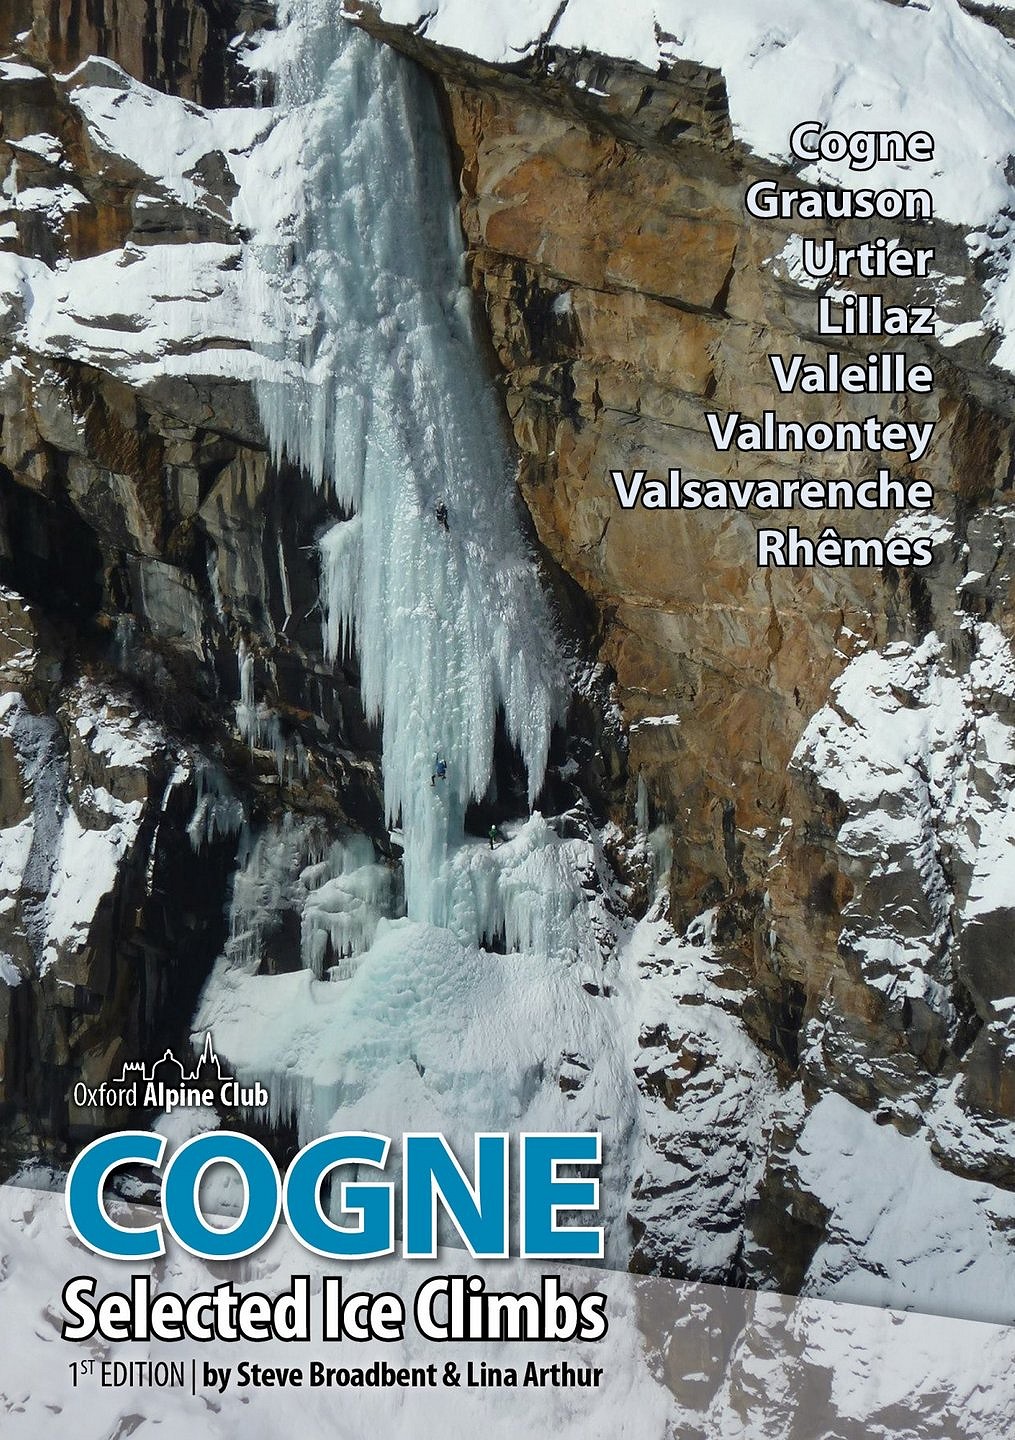 COGNE - Selected Ice Climbs  © Steve Broadbent & Lina Arthur